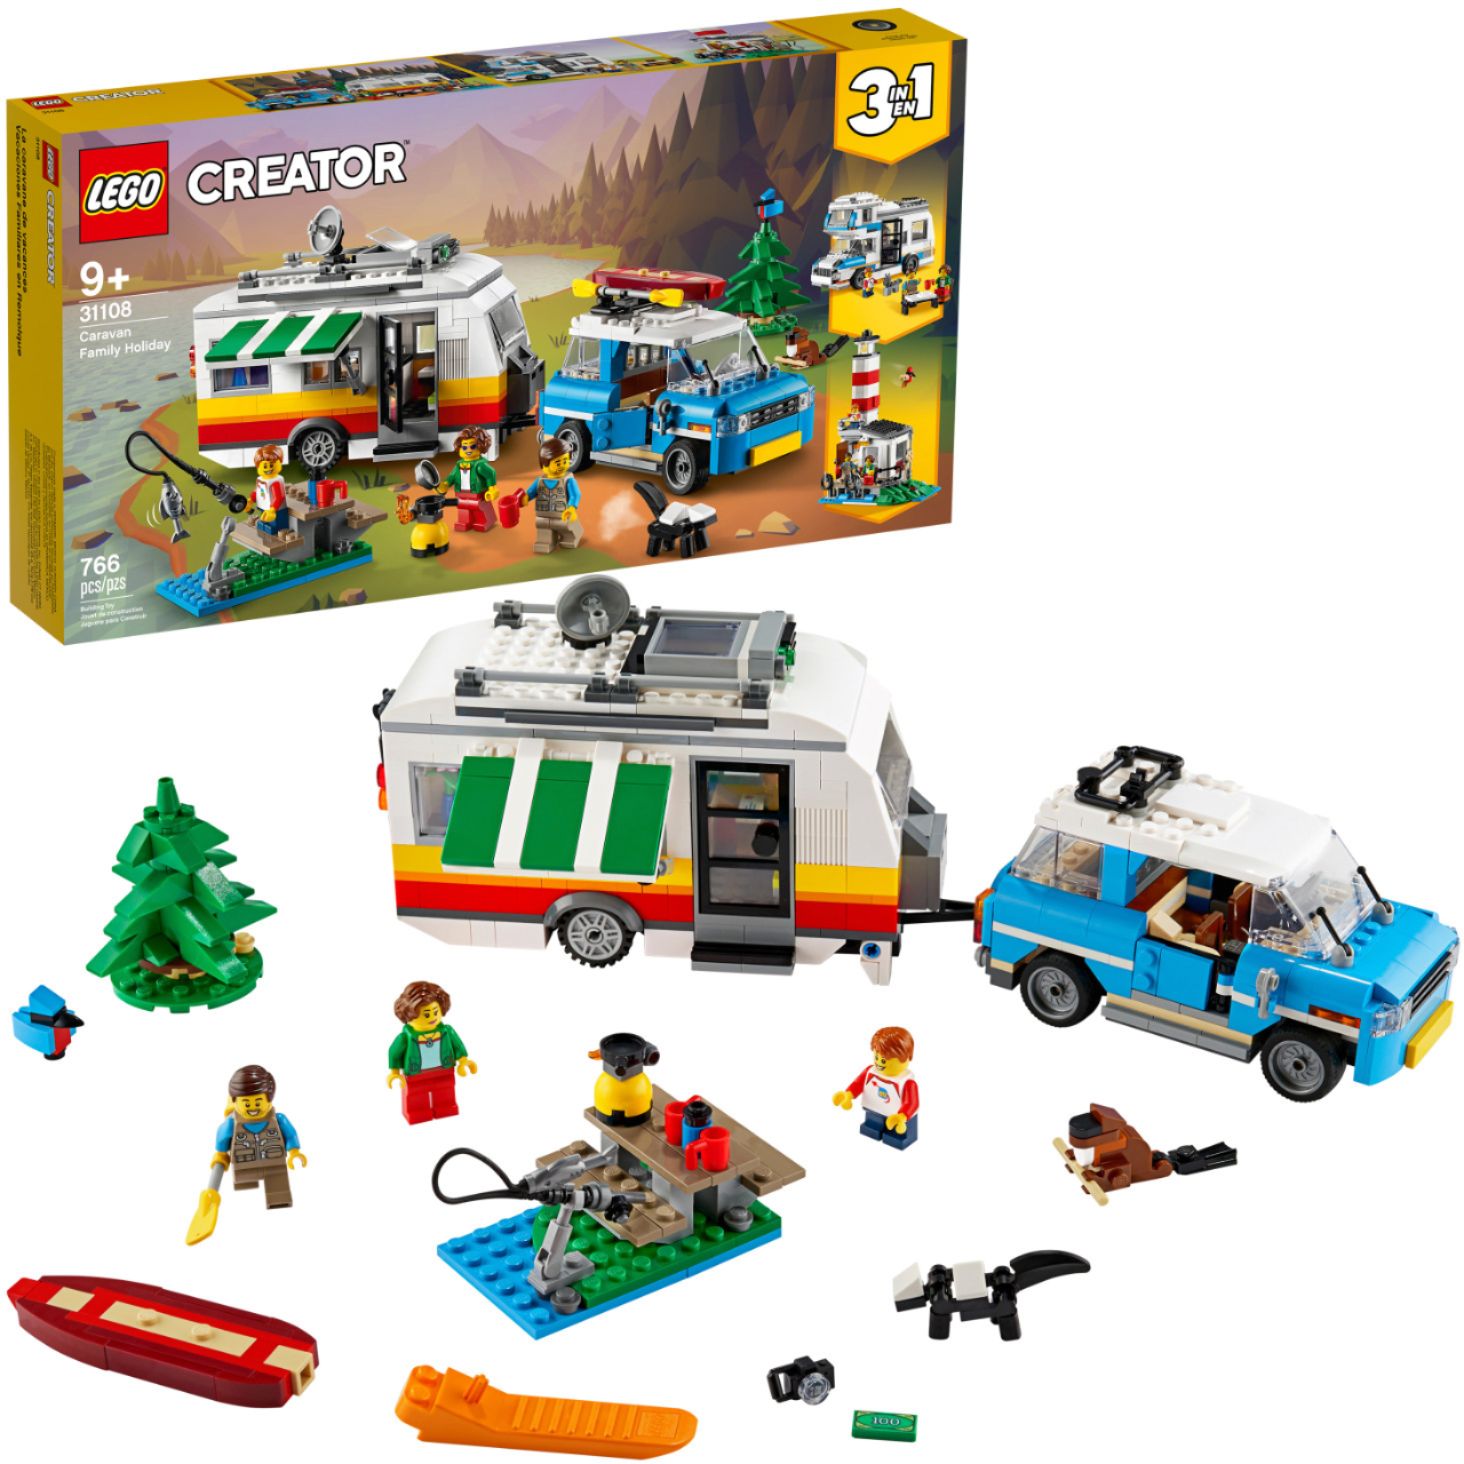 LEGO Creator in 1 Caravan Holiday 31108 - Best Buy